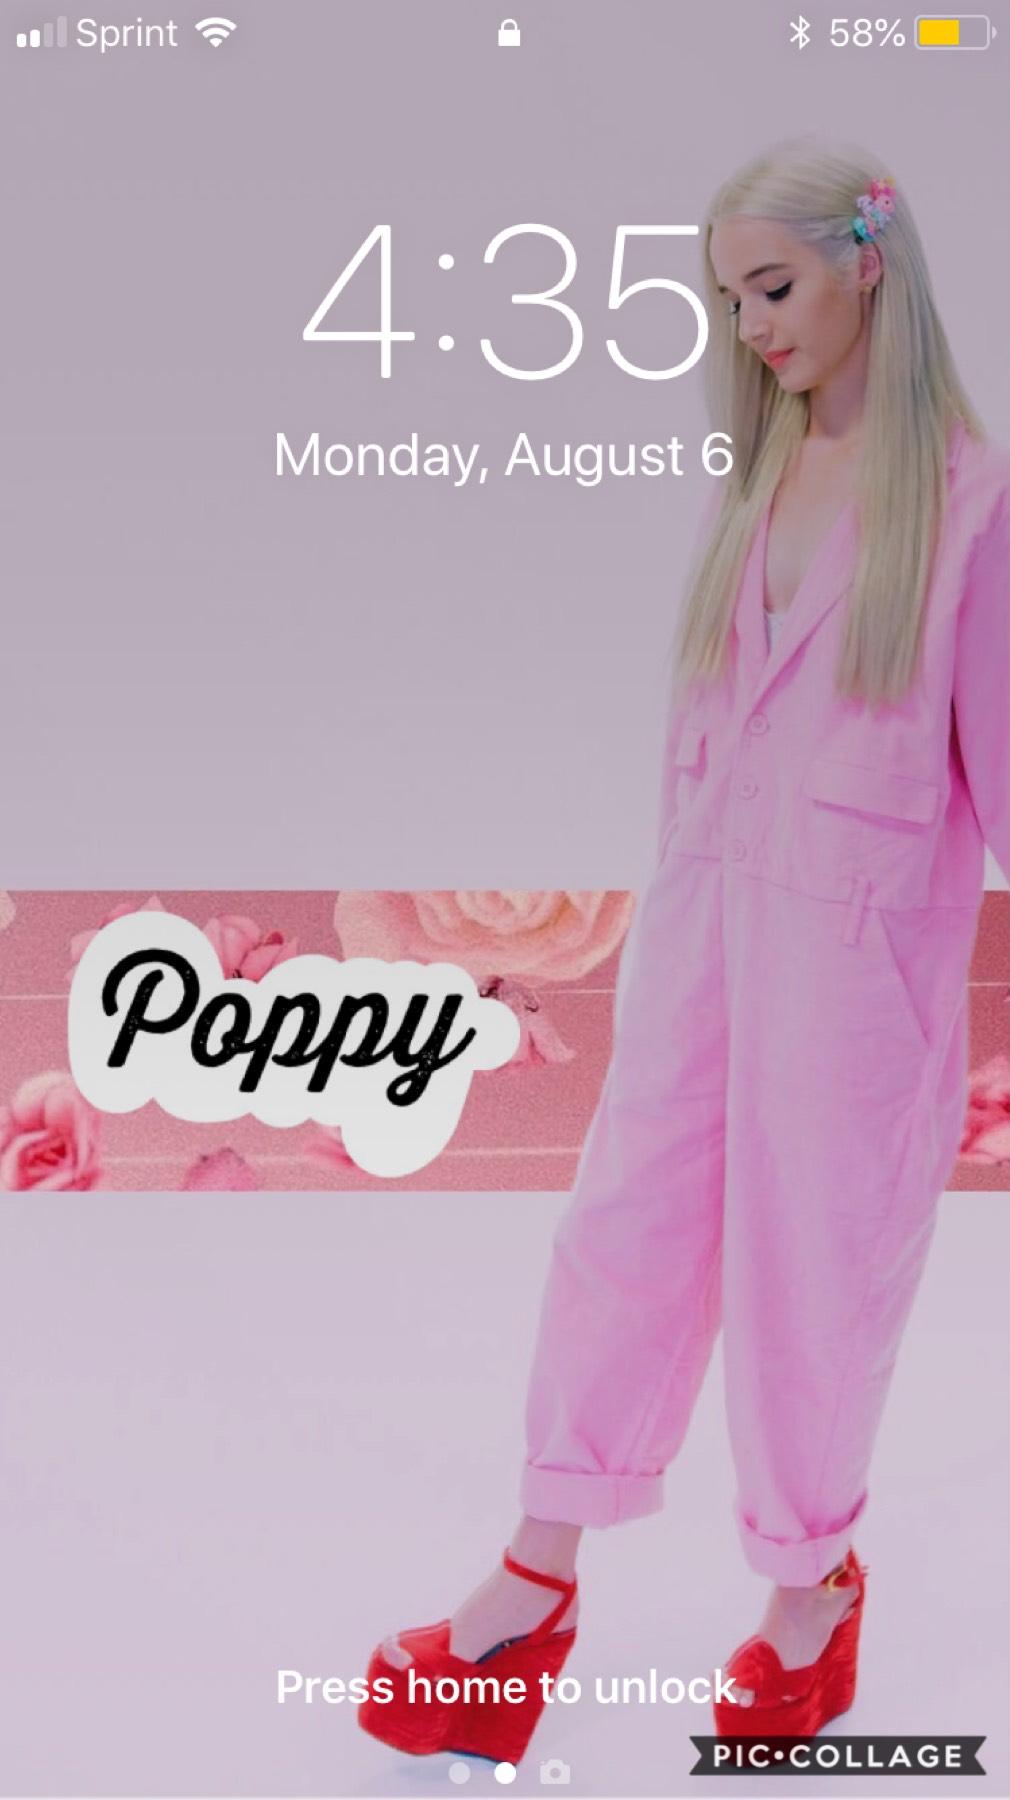 Poppy (lock screen)